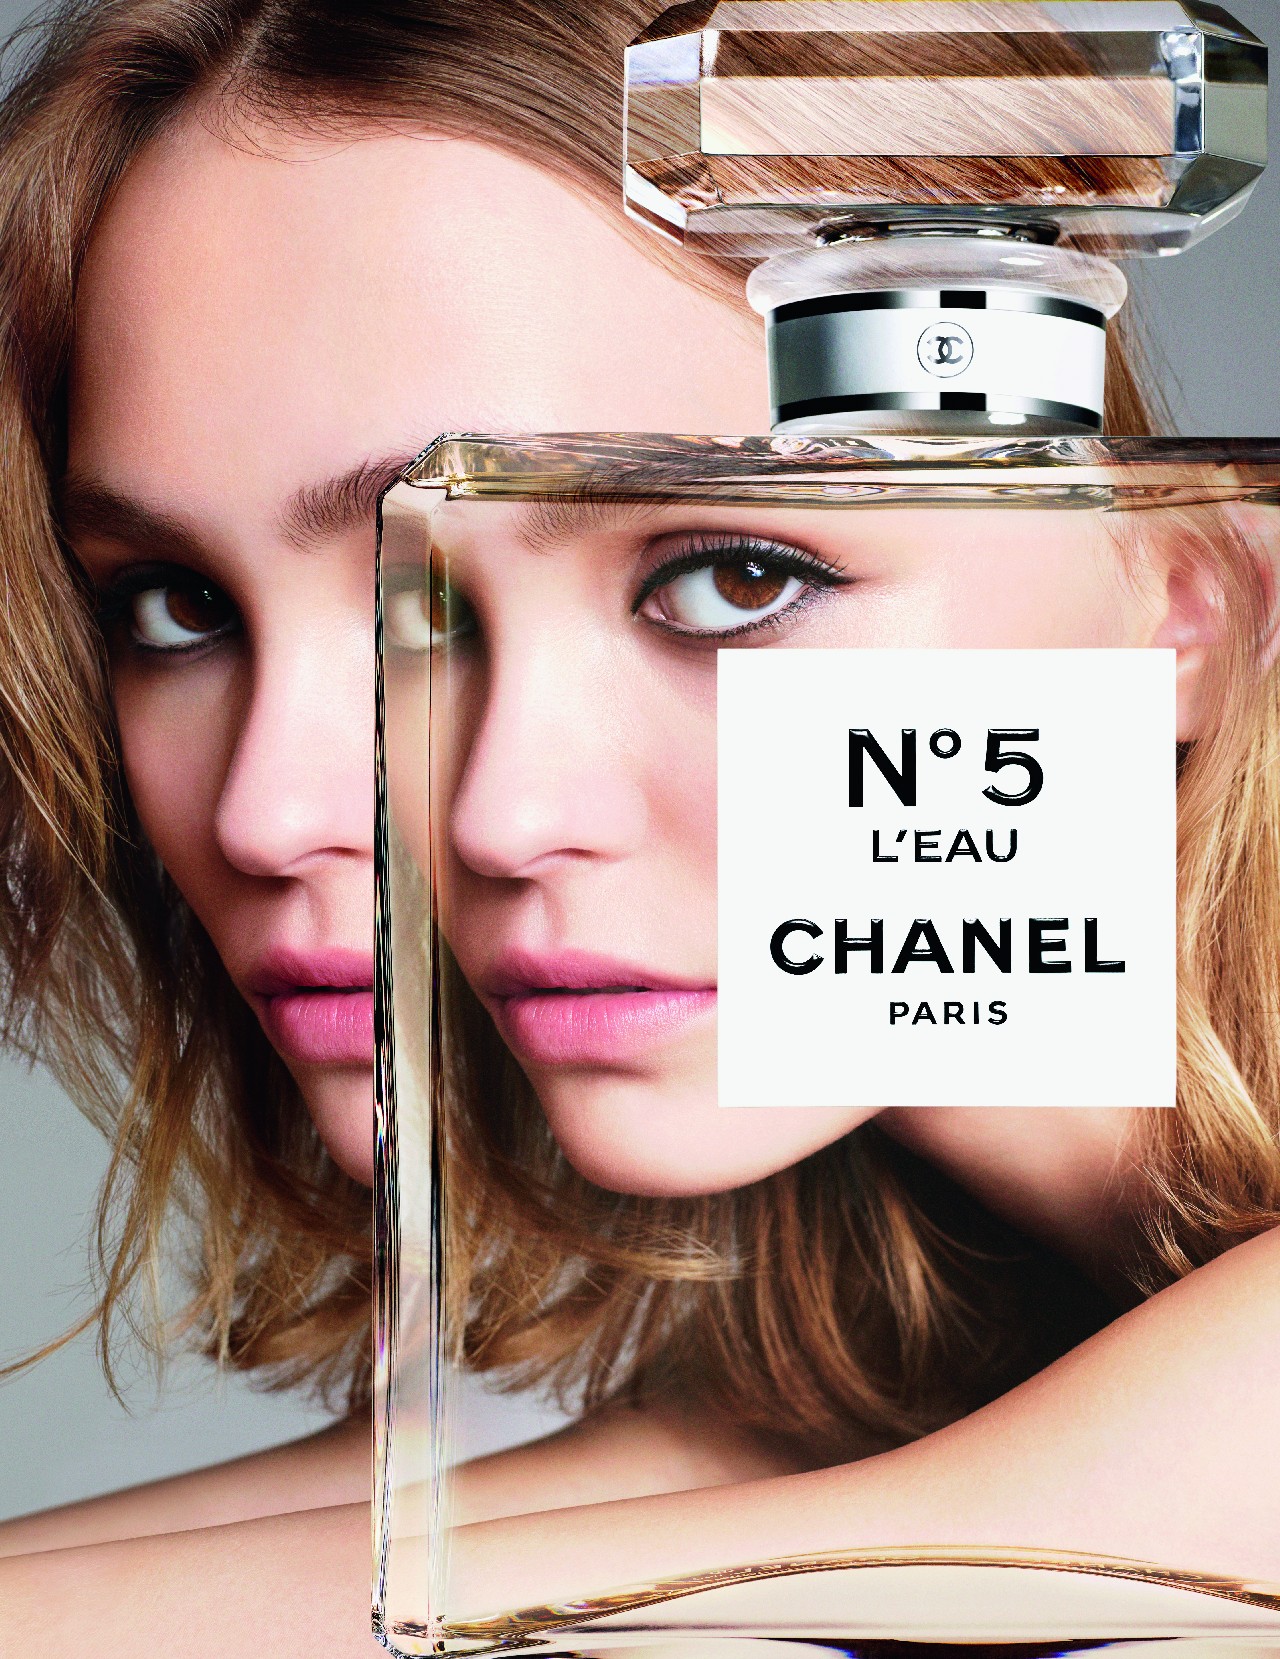 Chanel N 5 L&#8217;EAU: svelati i teaser della campagna pubblicitaria, testimonial Lily-Rose Depp